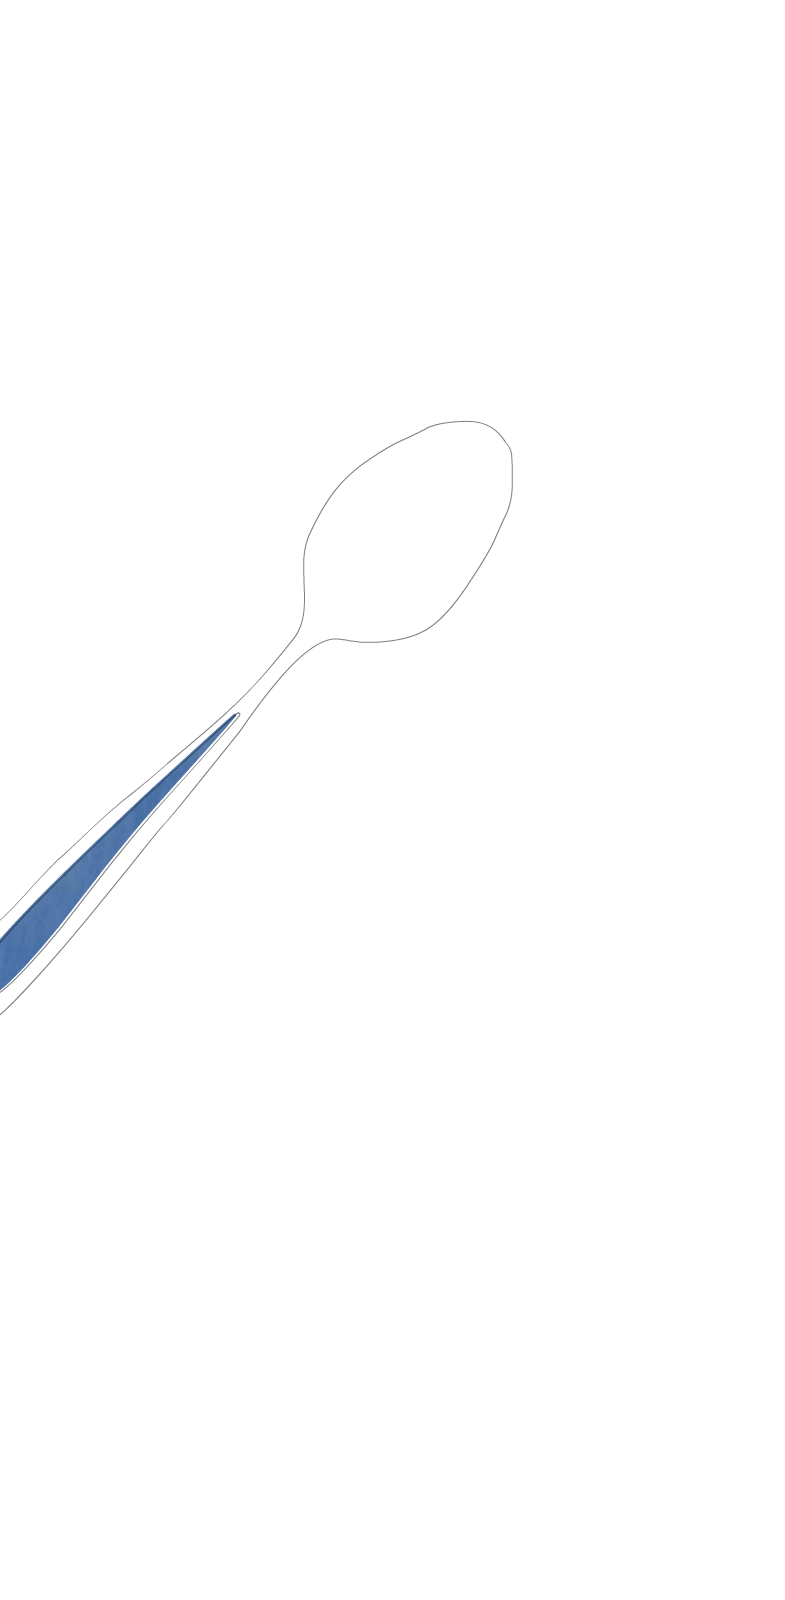 Illustration of spoon